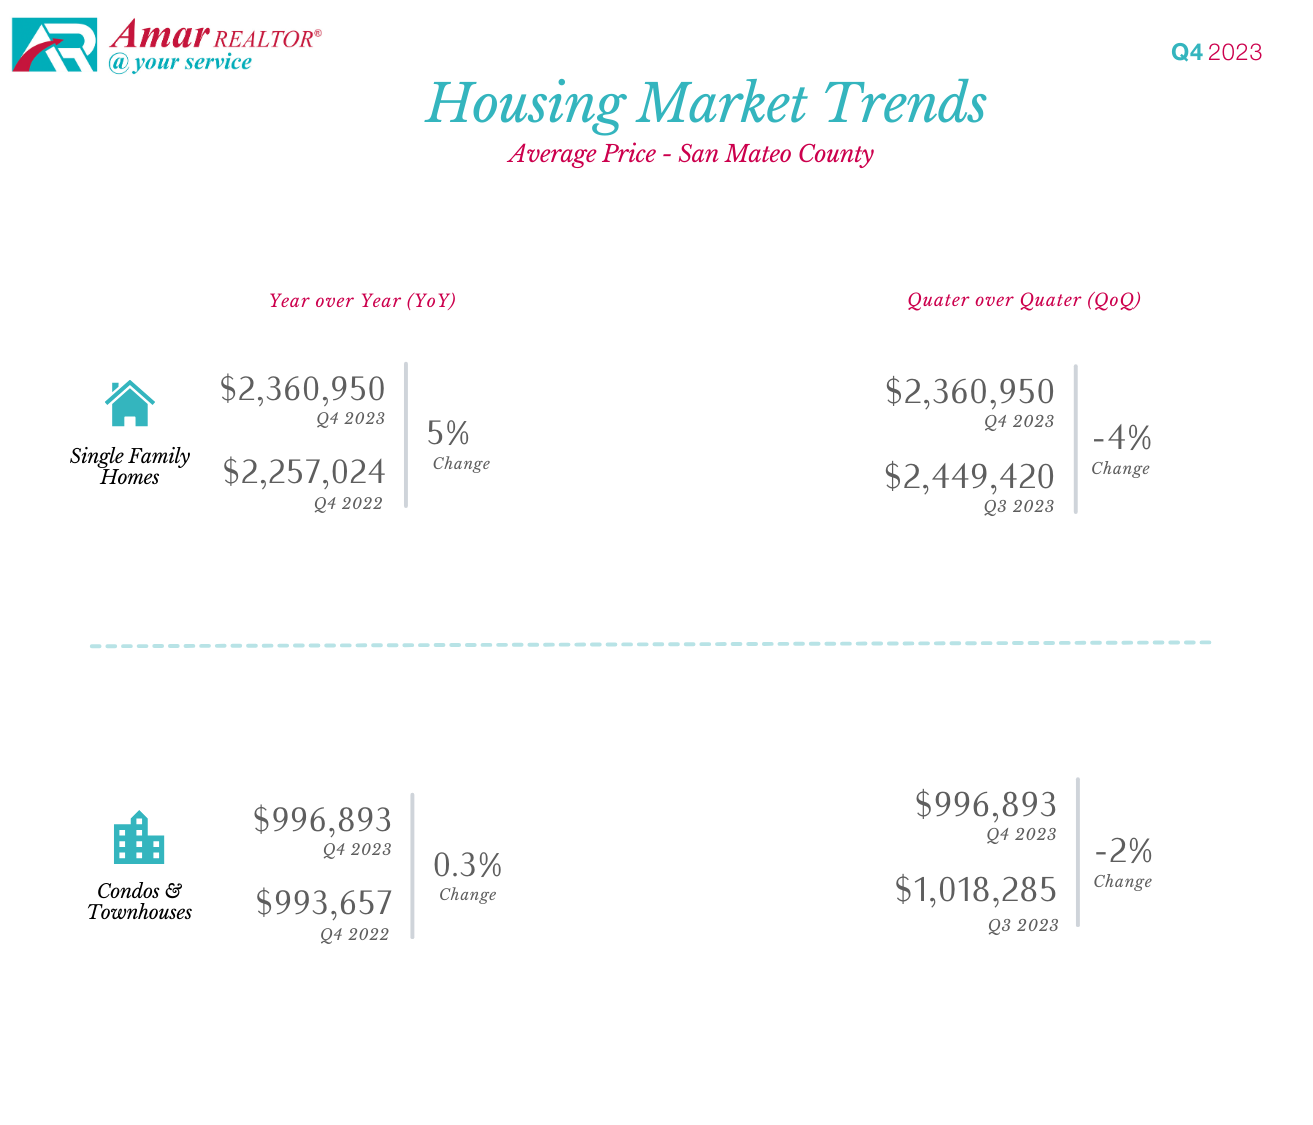 San Mateo County Housing Market Trends - Q4 2023